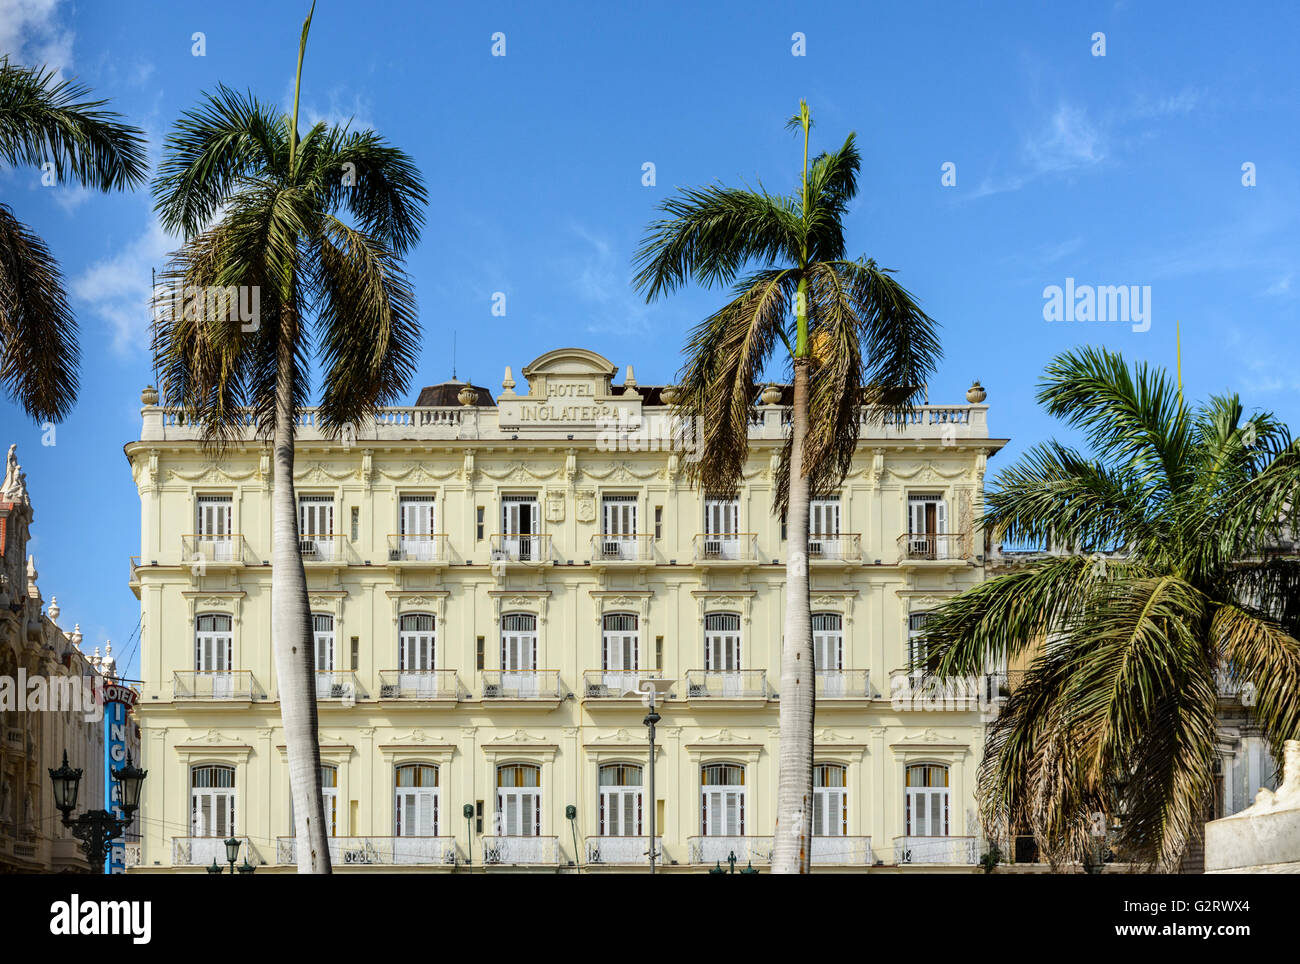 L'Hotel Inglaterra, Parque Central, Havana, Cuba Foto Stock